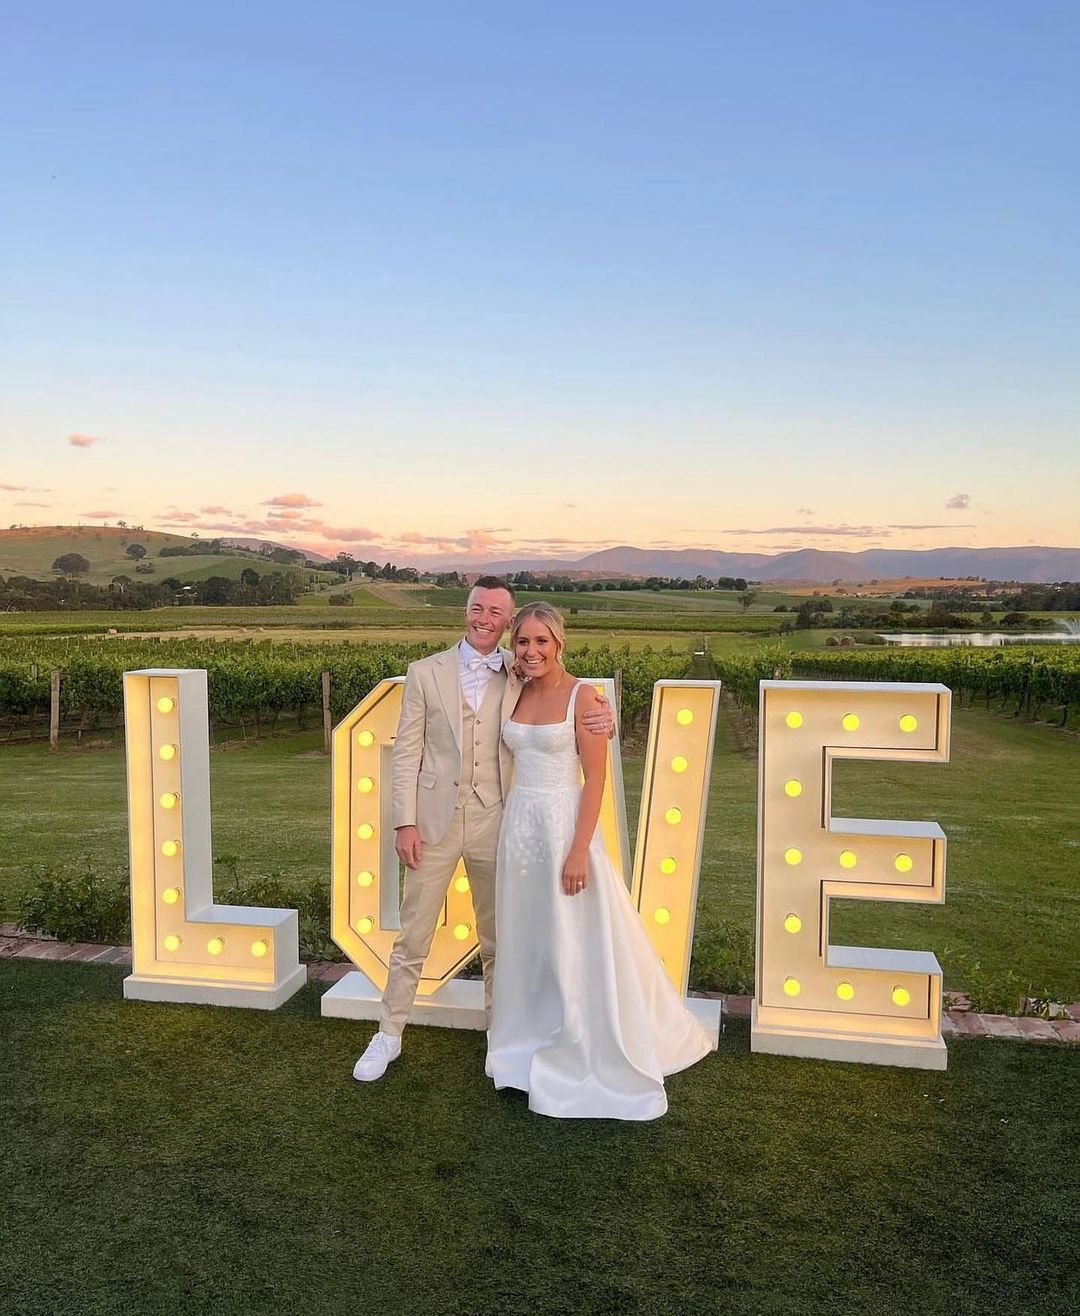 Aussie jockey Patrick Moloney marries Jess Patton in romantic ceremony in Yarra Valley.